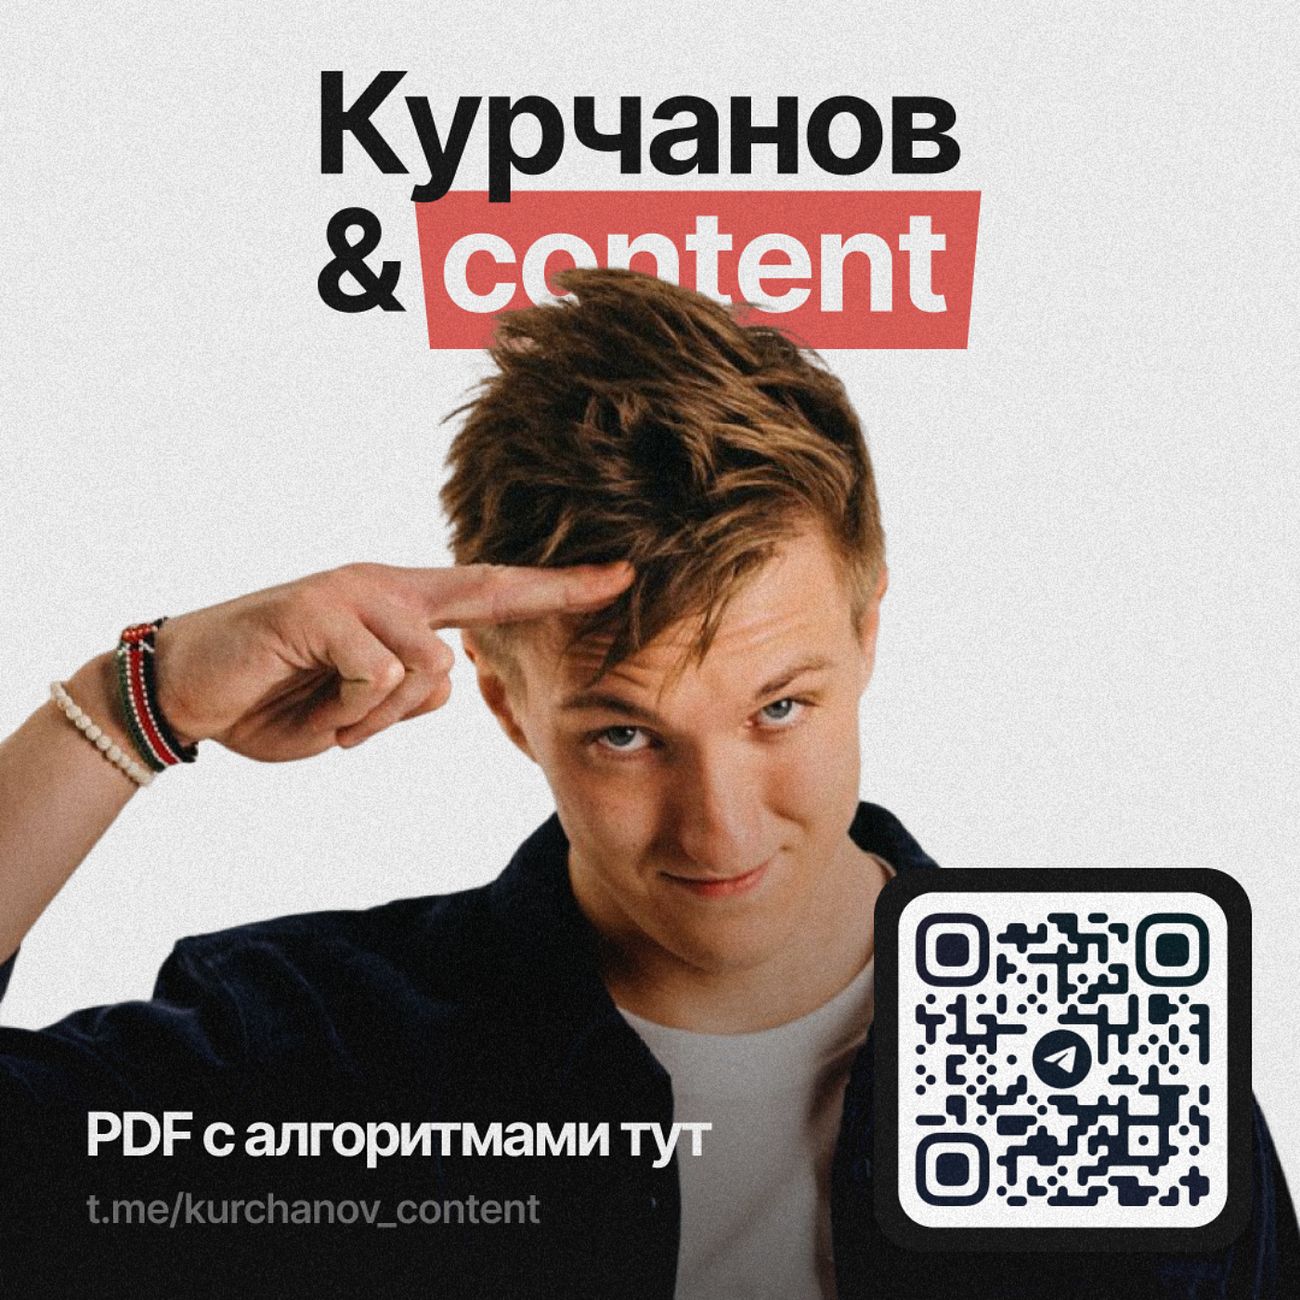 Курчанов & content